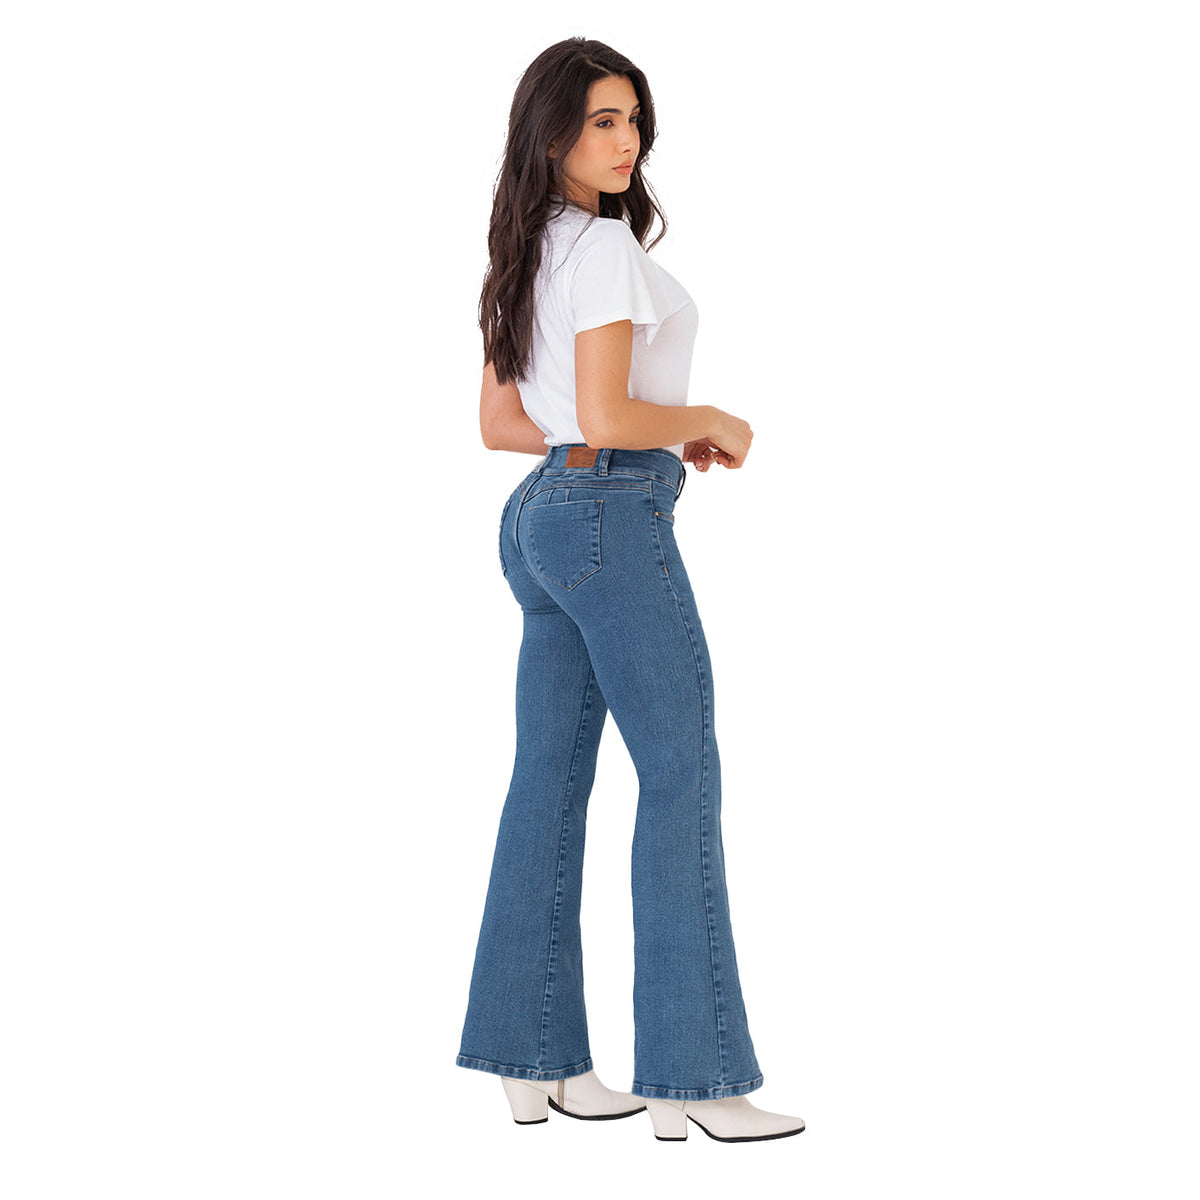 DIAMANTE - LOWLA 212357 - Bum Lift Flare Colombian Jeans